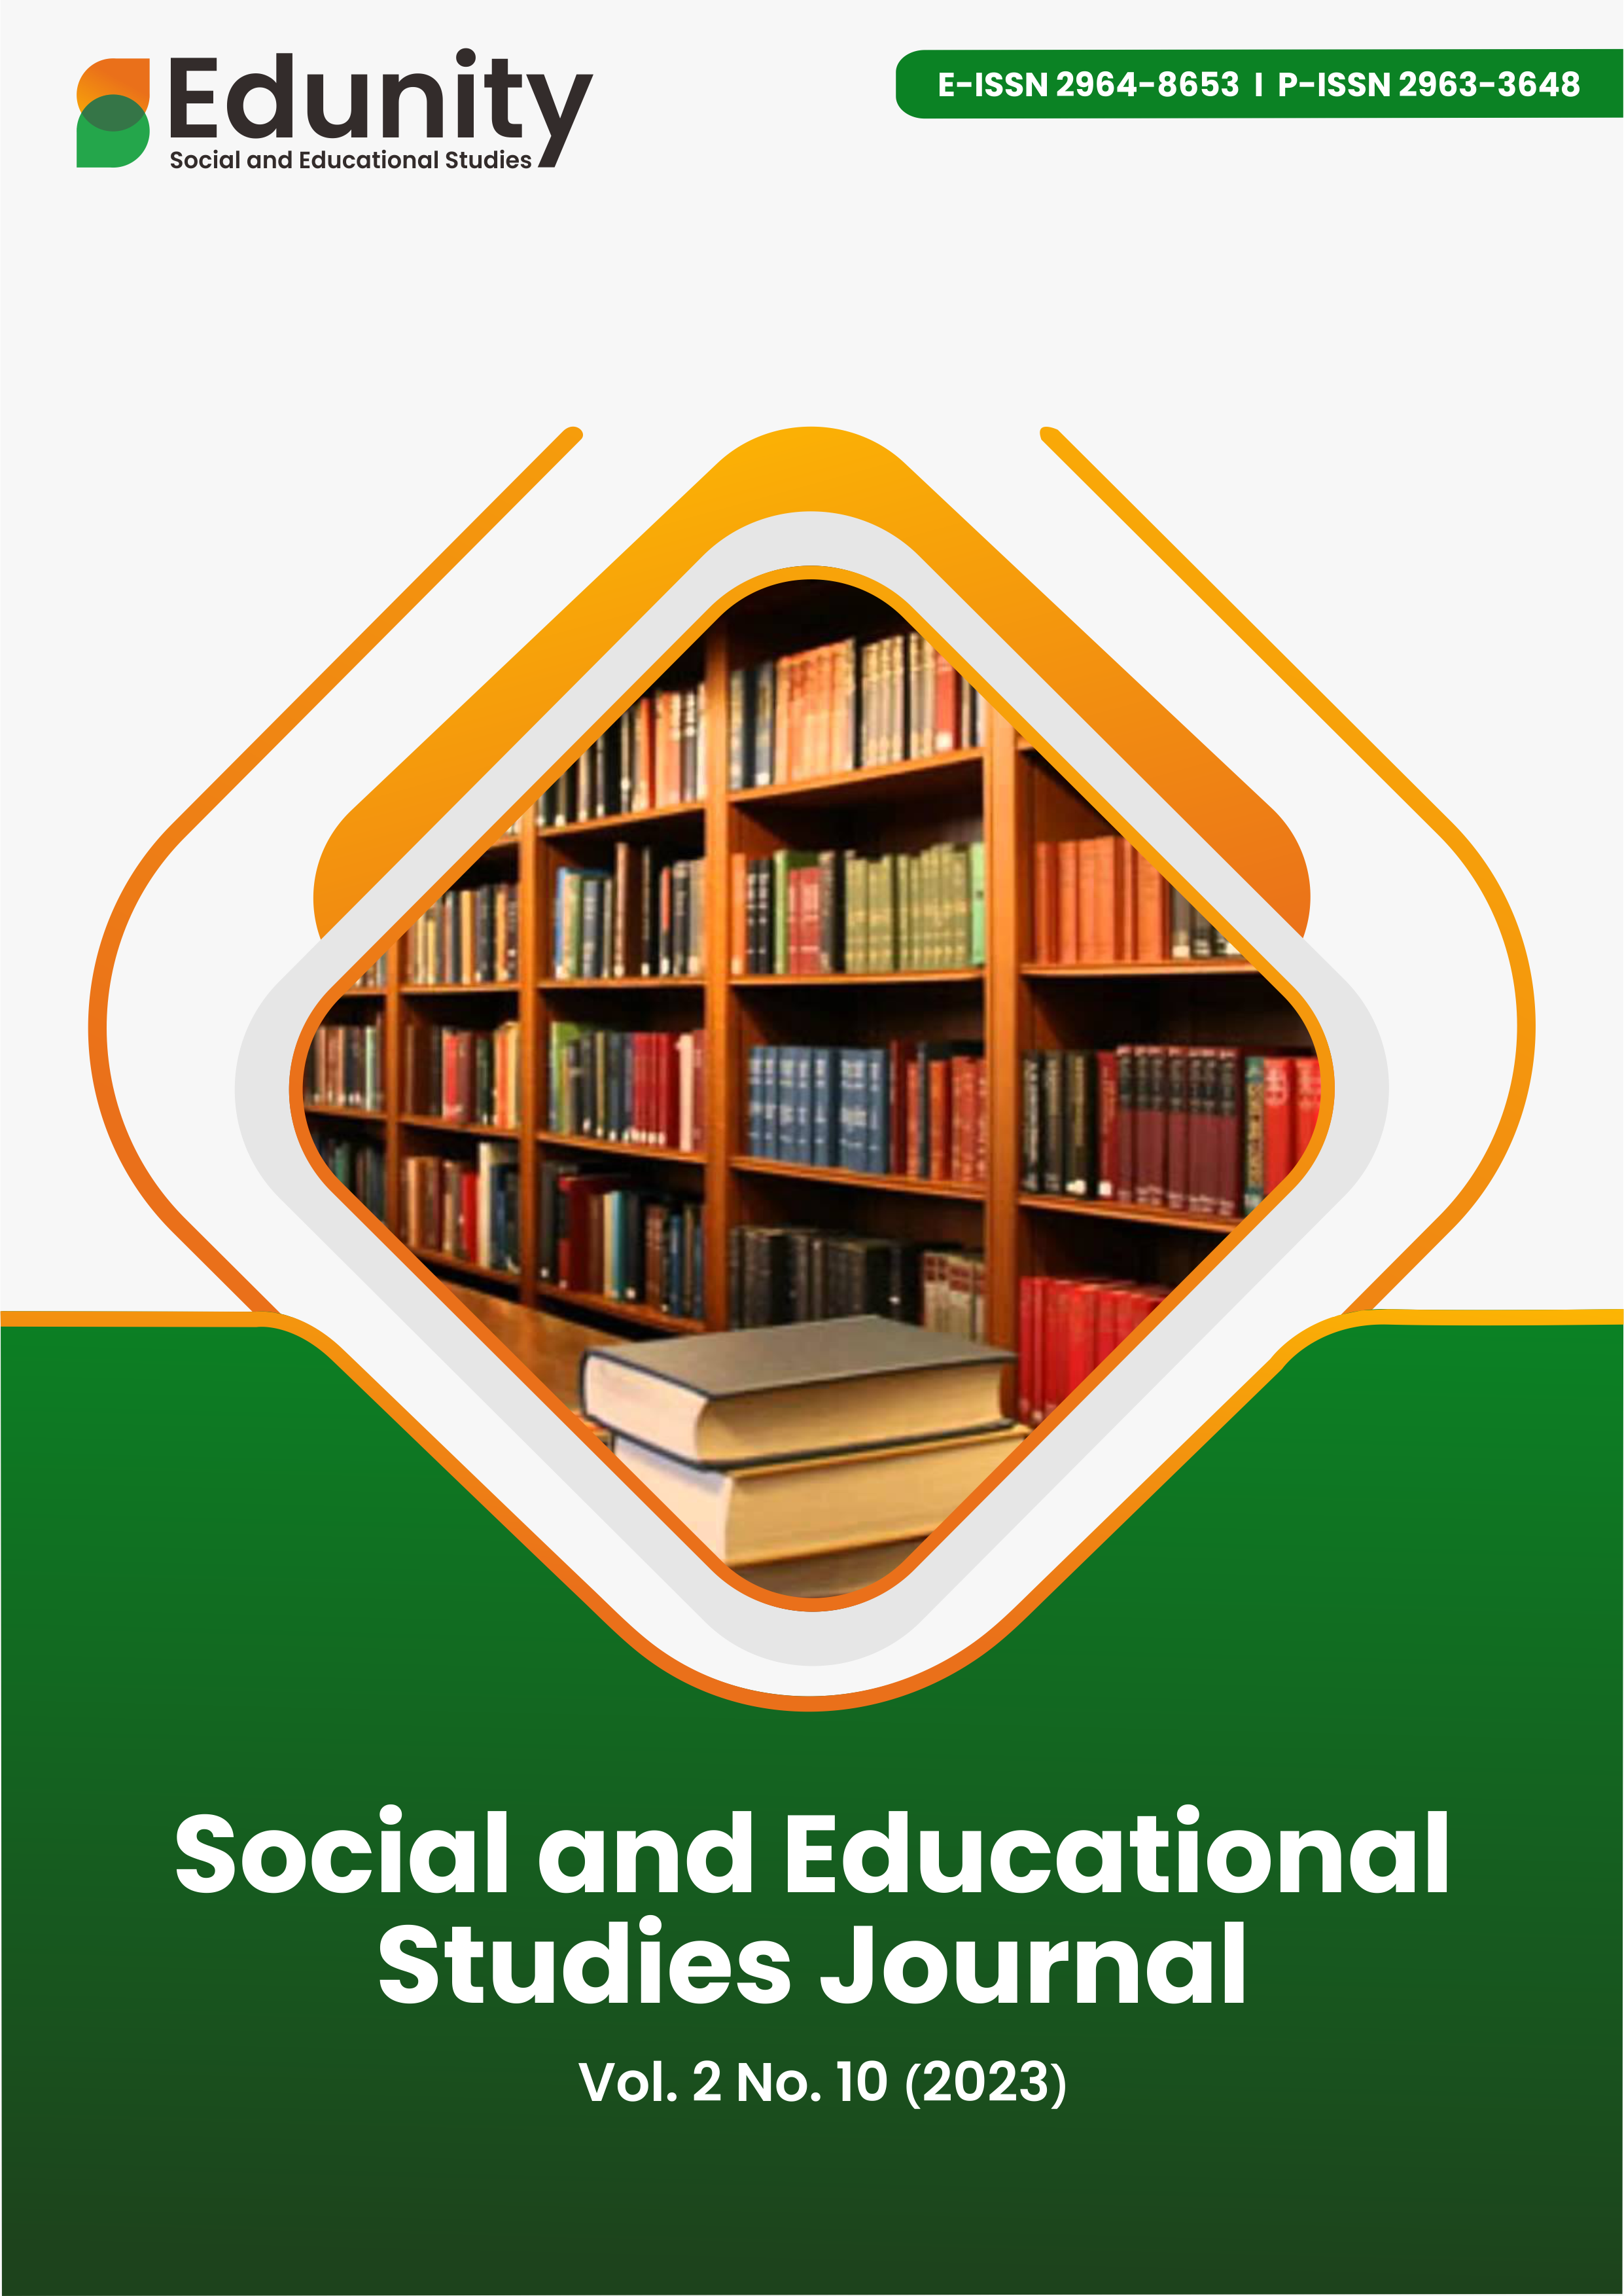 					View Vol. 2 No. 10 (2023): Edunity : Social and Educational Studies
				